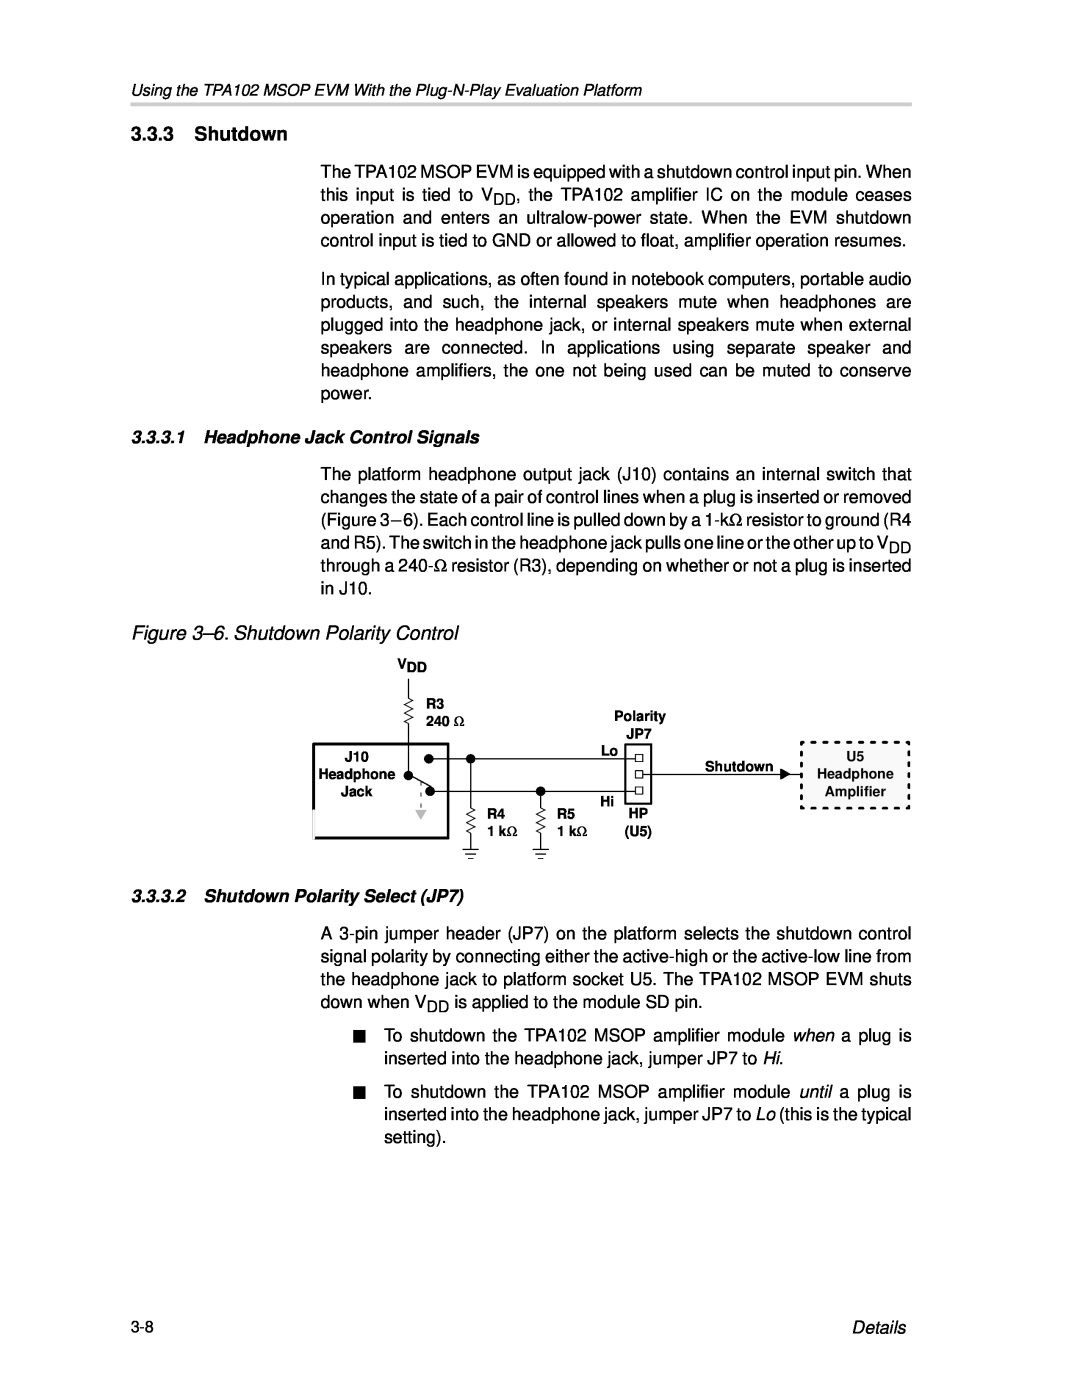 Texas Instruments TPA102 MSOP manual 3.3.3Shutdown, 6.Shutdown Polarity Control, Details 